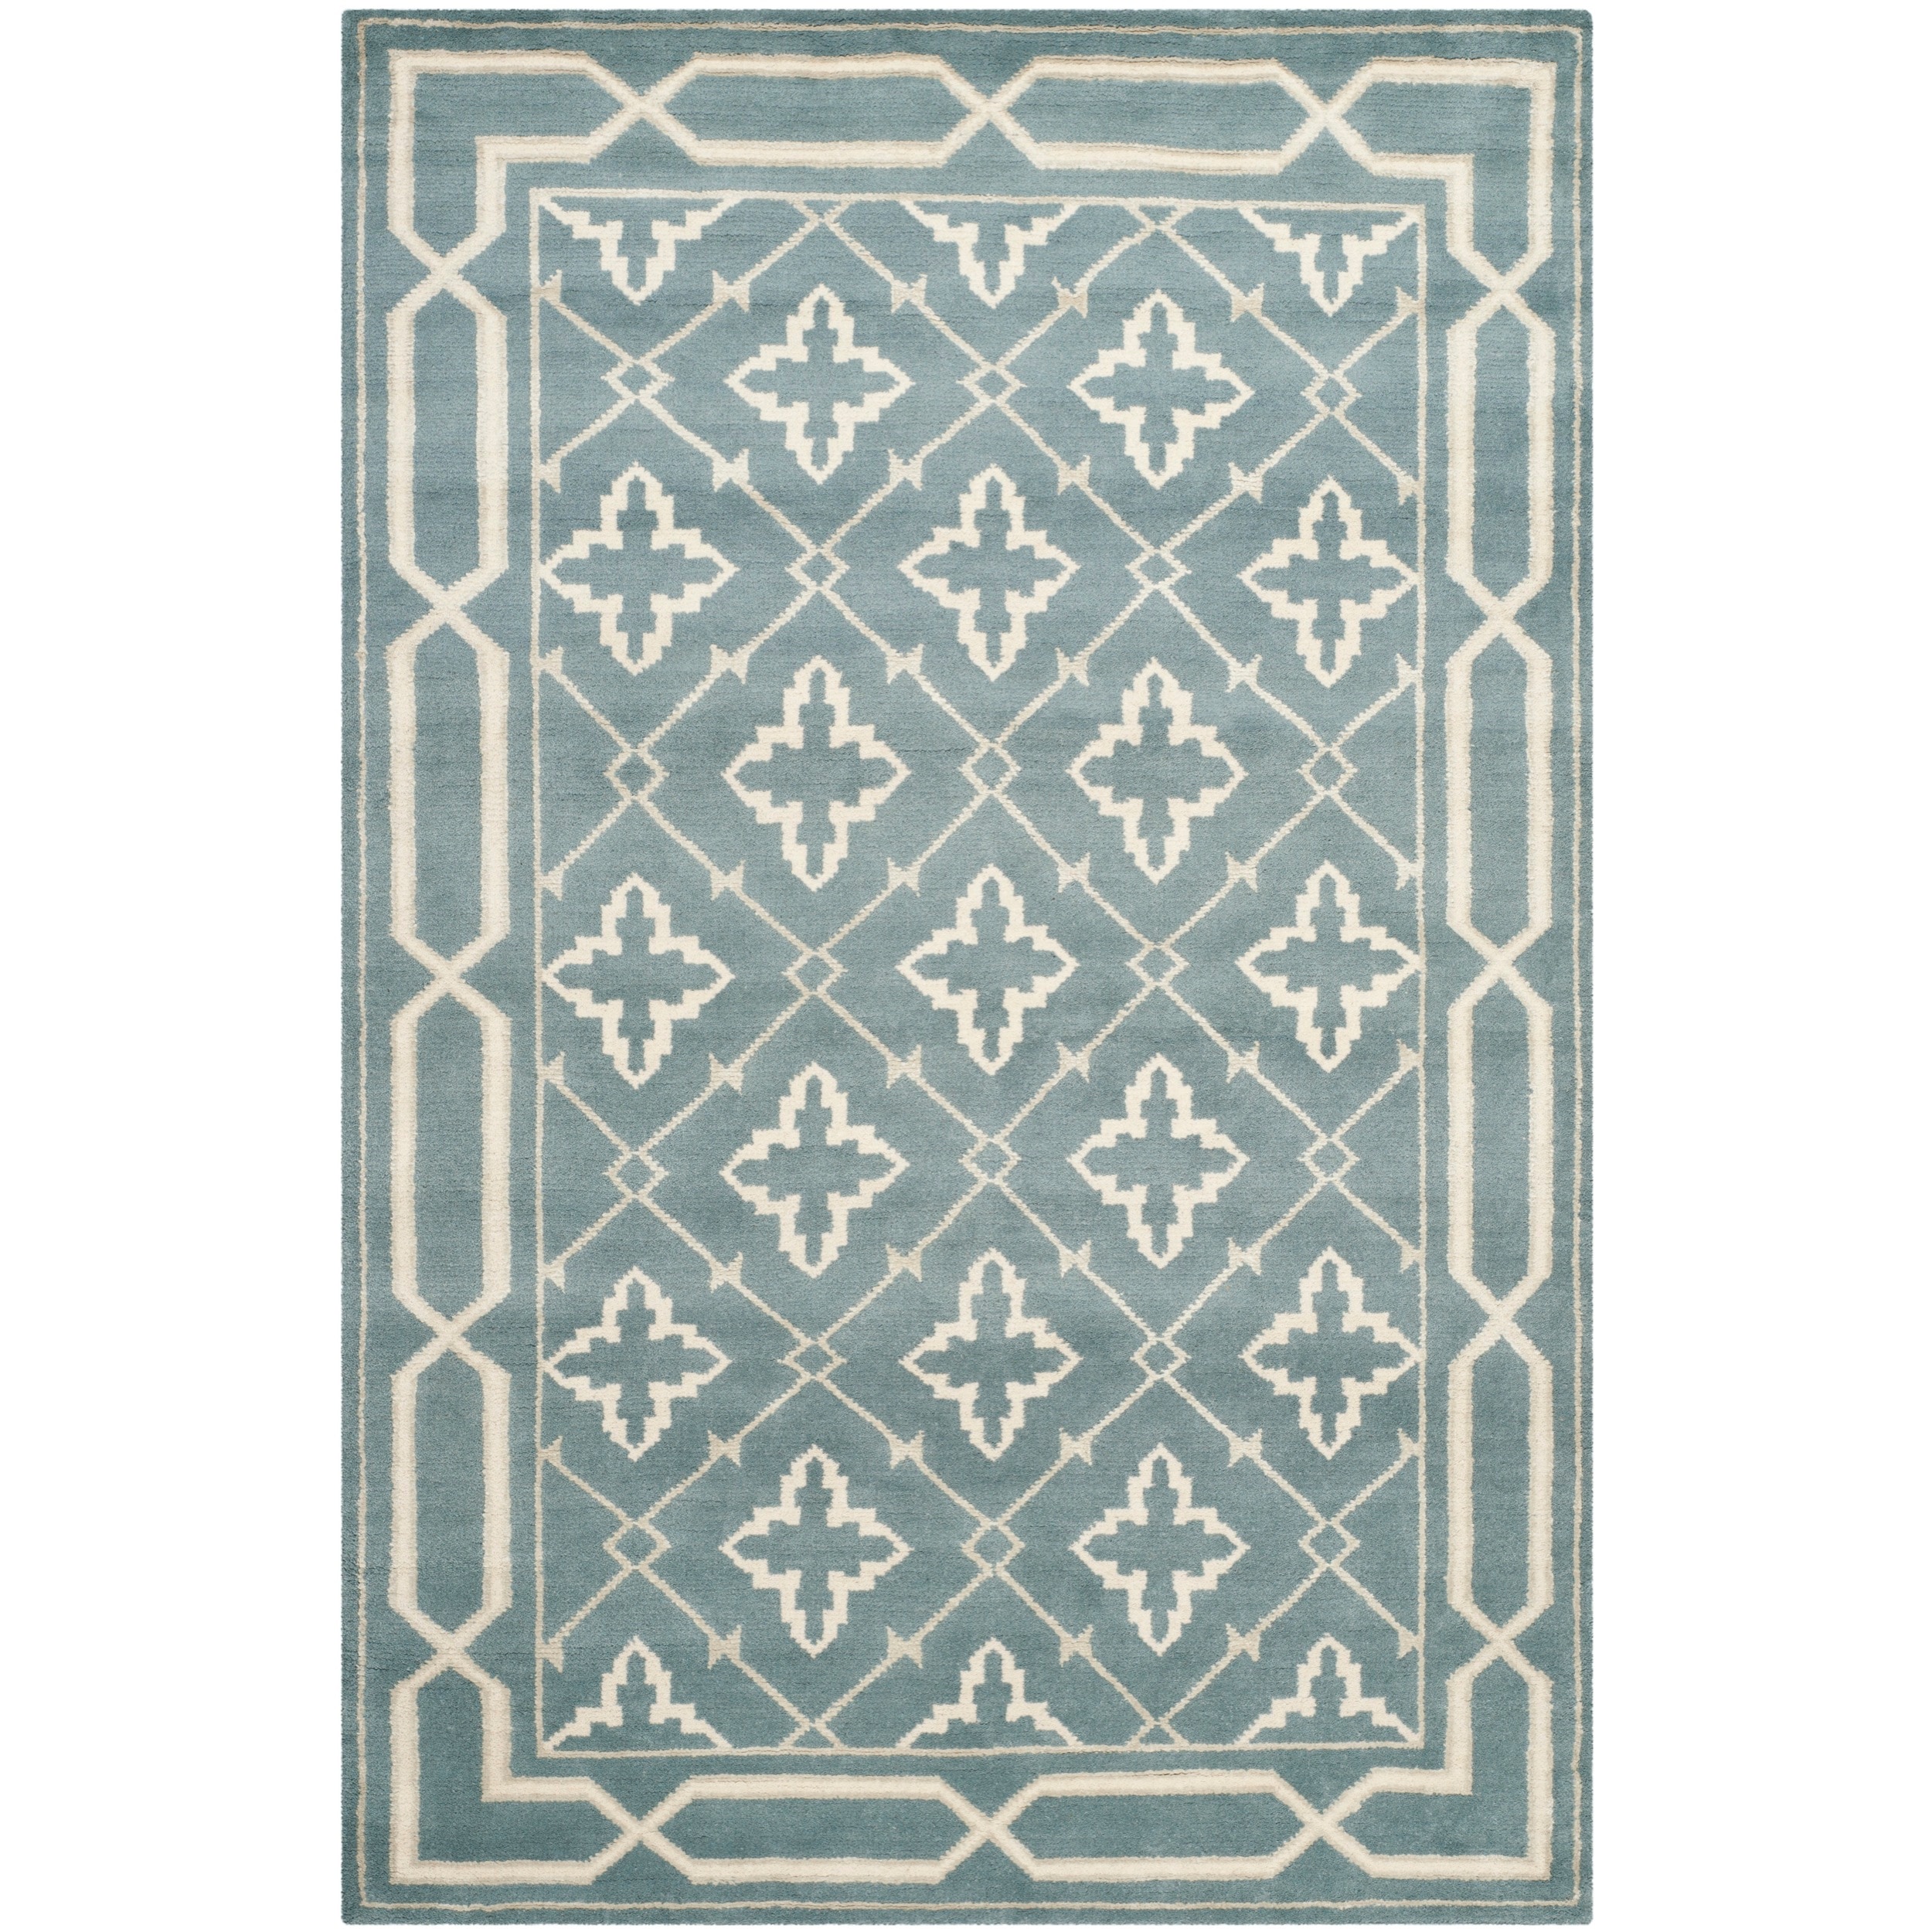 Safavieh Hand knotted Mosaic Blue/ Beige Wool/ Viscose Rug (8 X 10)